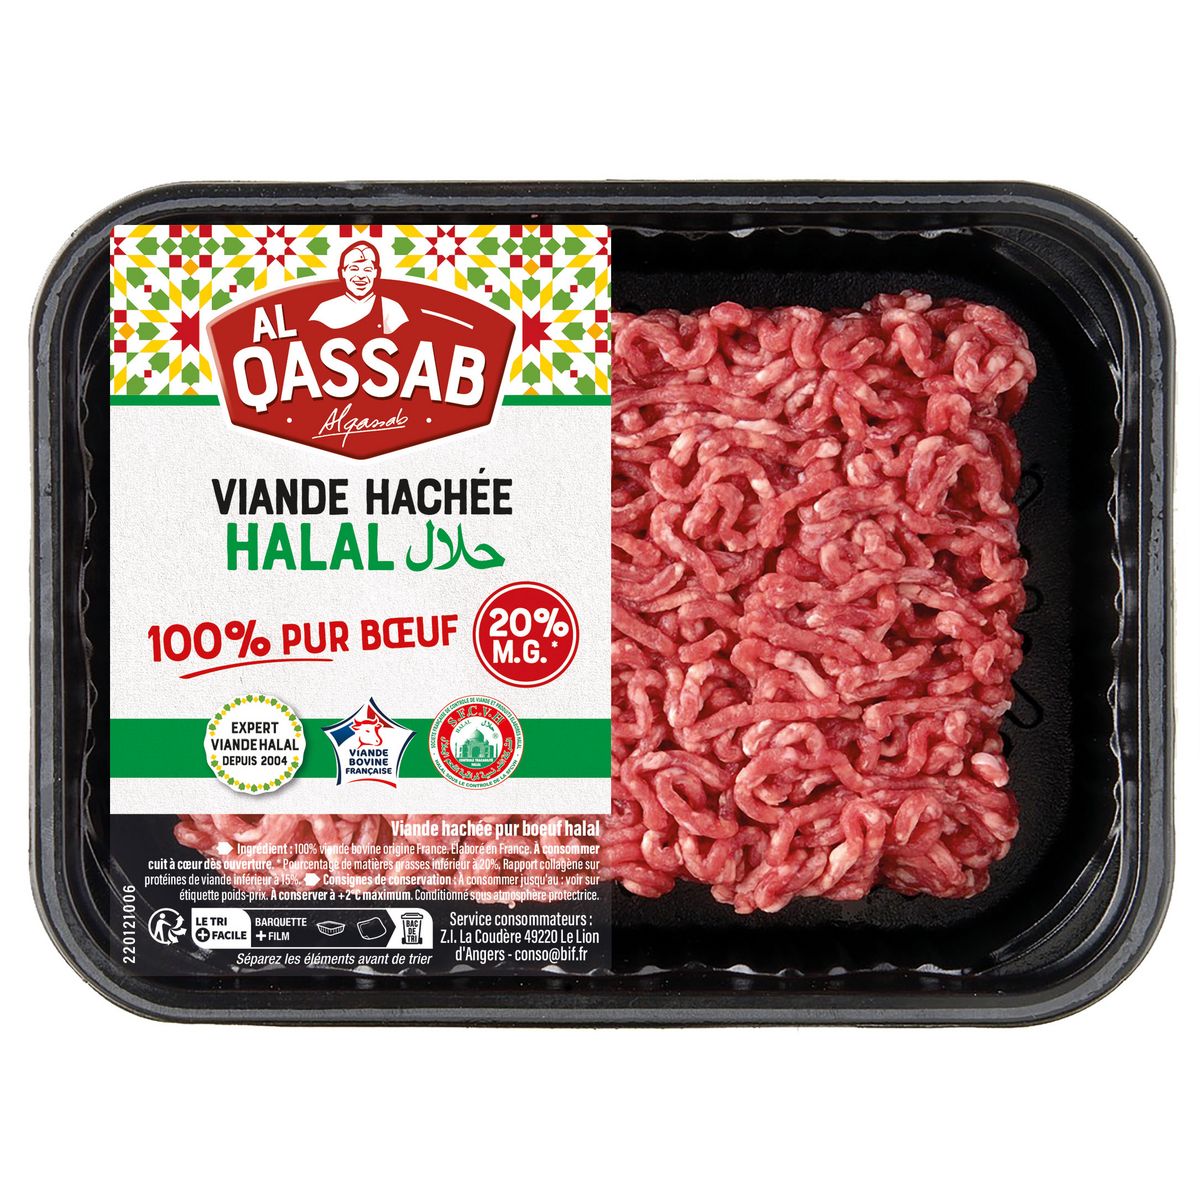 AL QASSAB Viande hachée pur bœuf halal 20% MG 700g